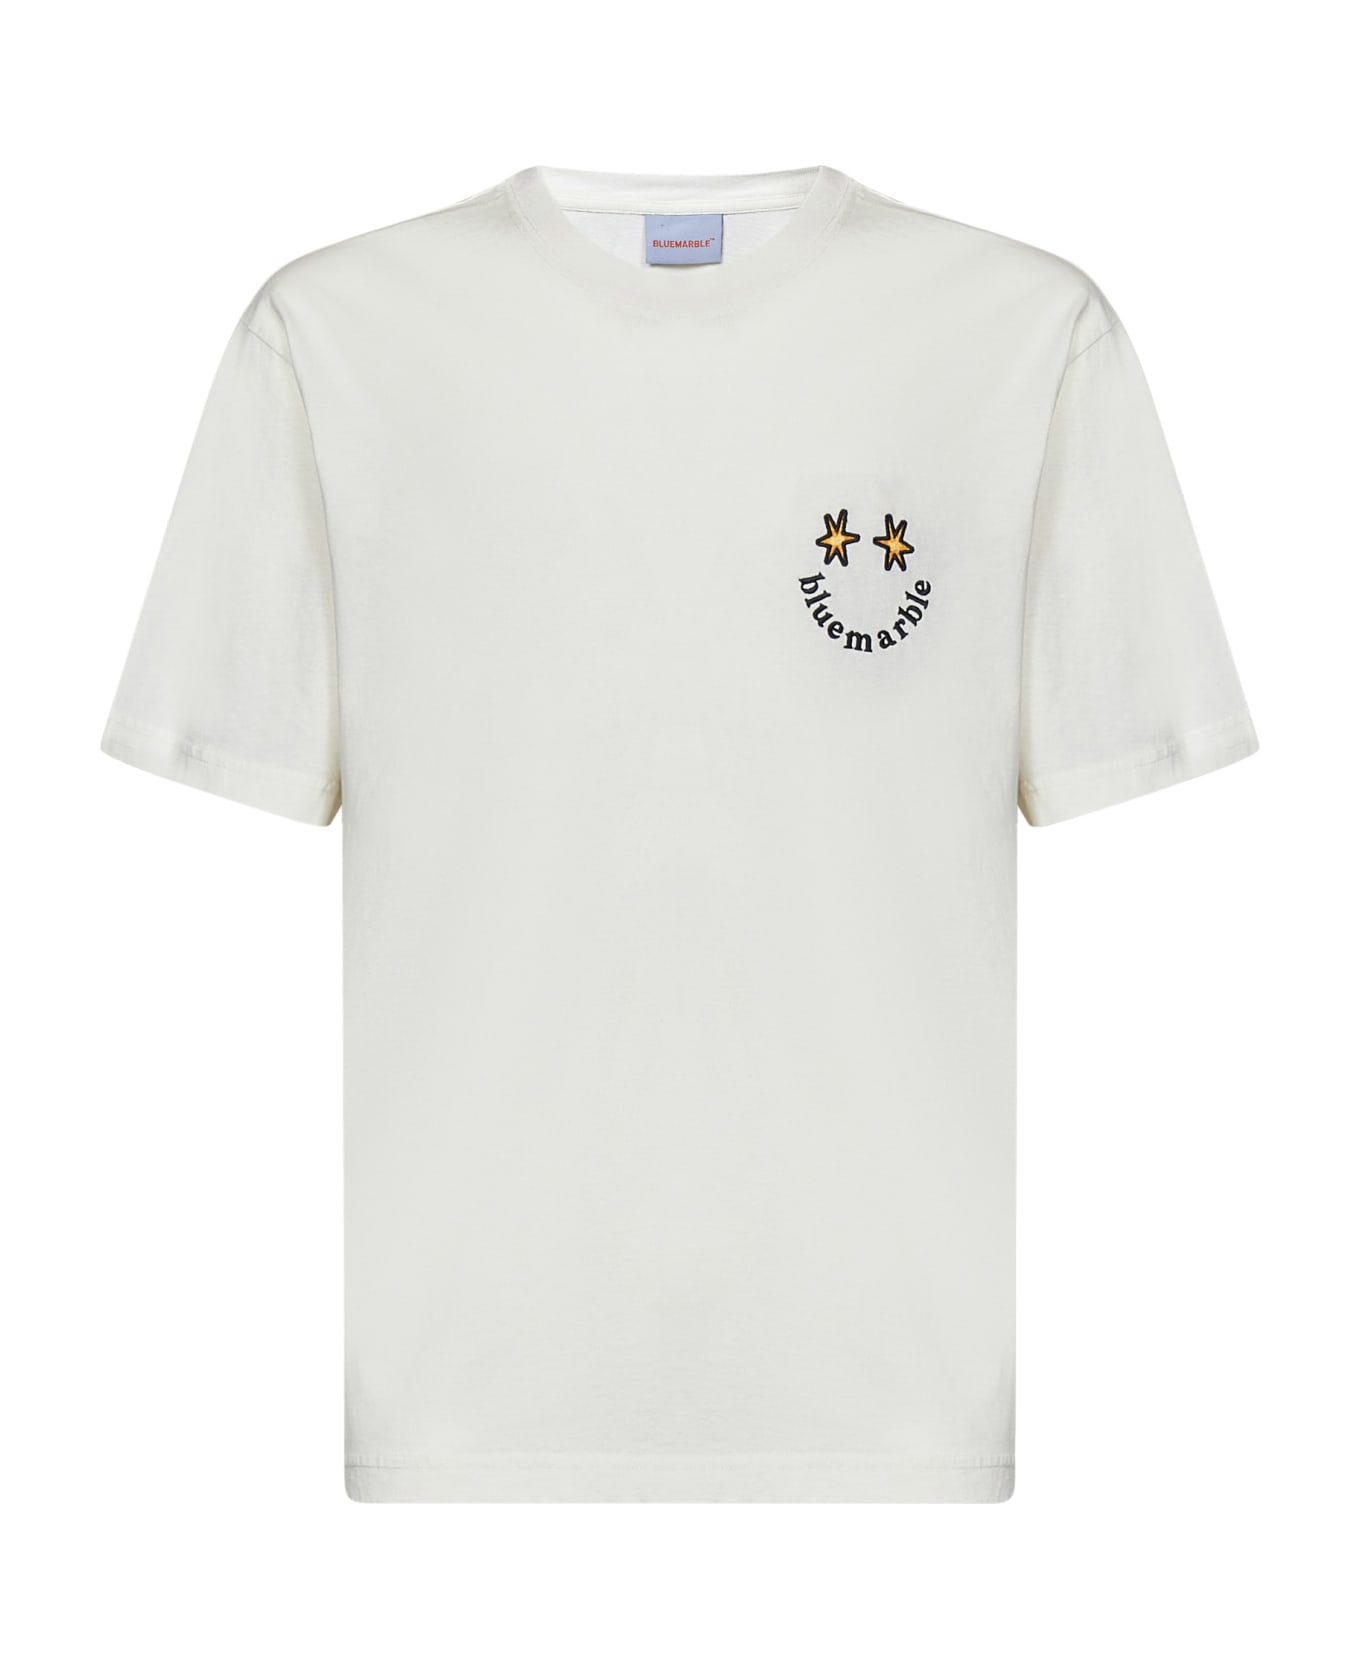 Bluemarble T-shirt - White